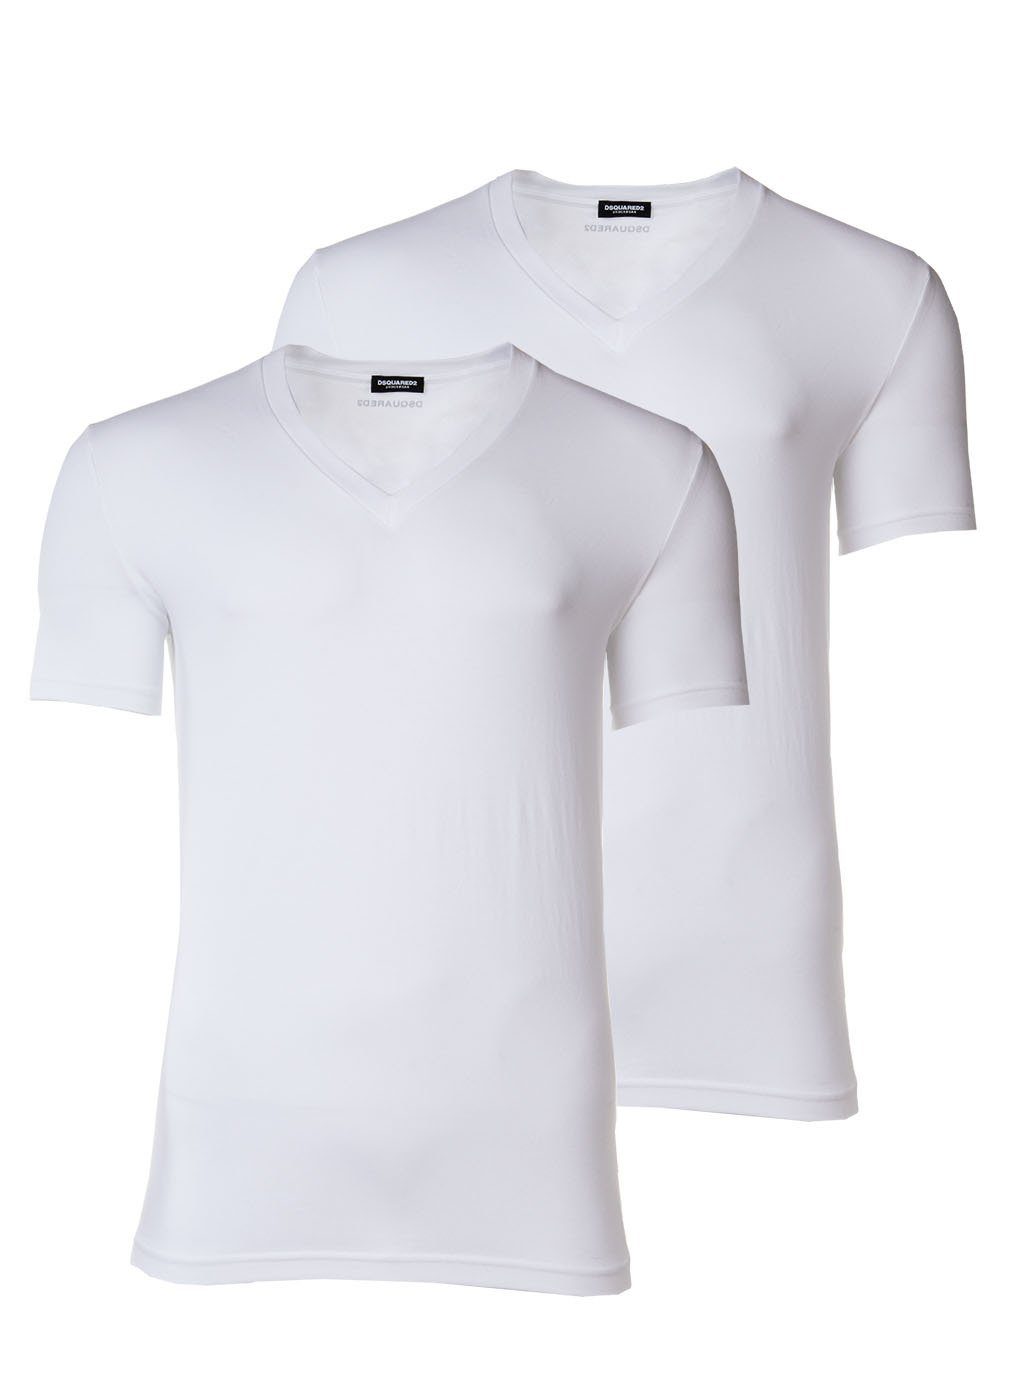 Dsquared2 T-Shirt Herren T-Shirt - V-Neck, Cotton Stretch Twin Pack Weiß